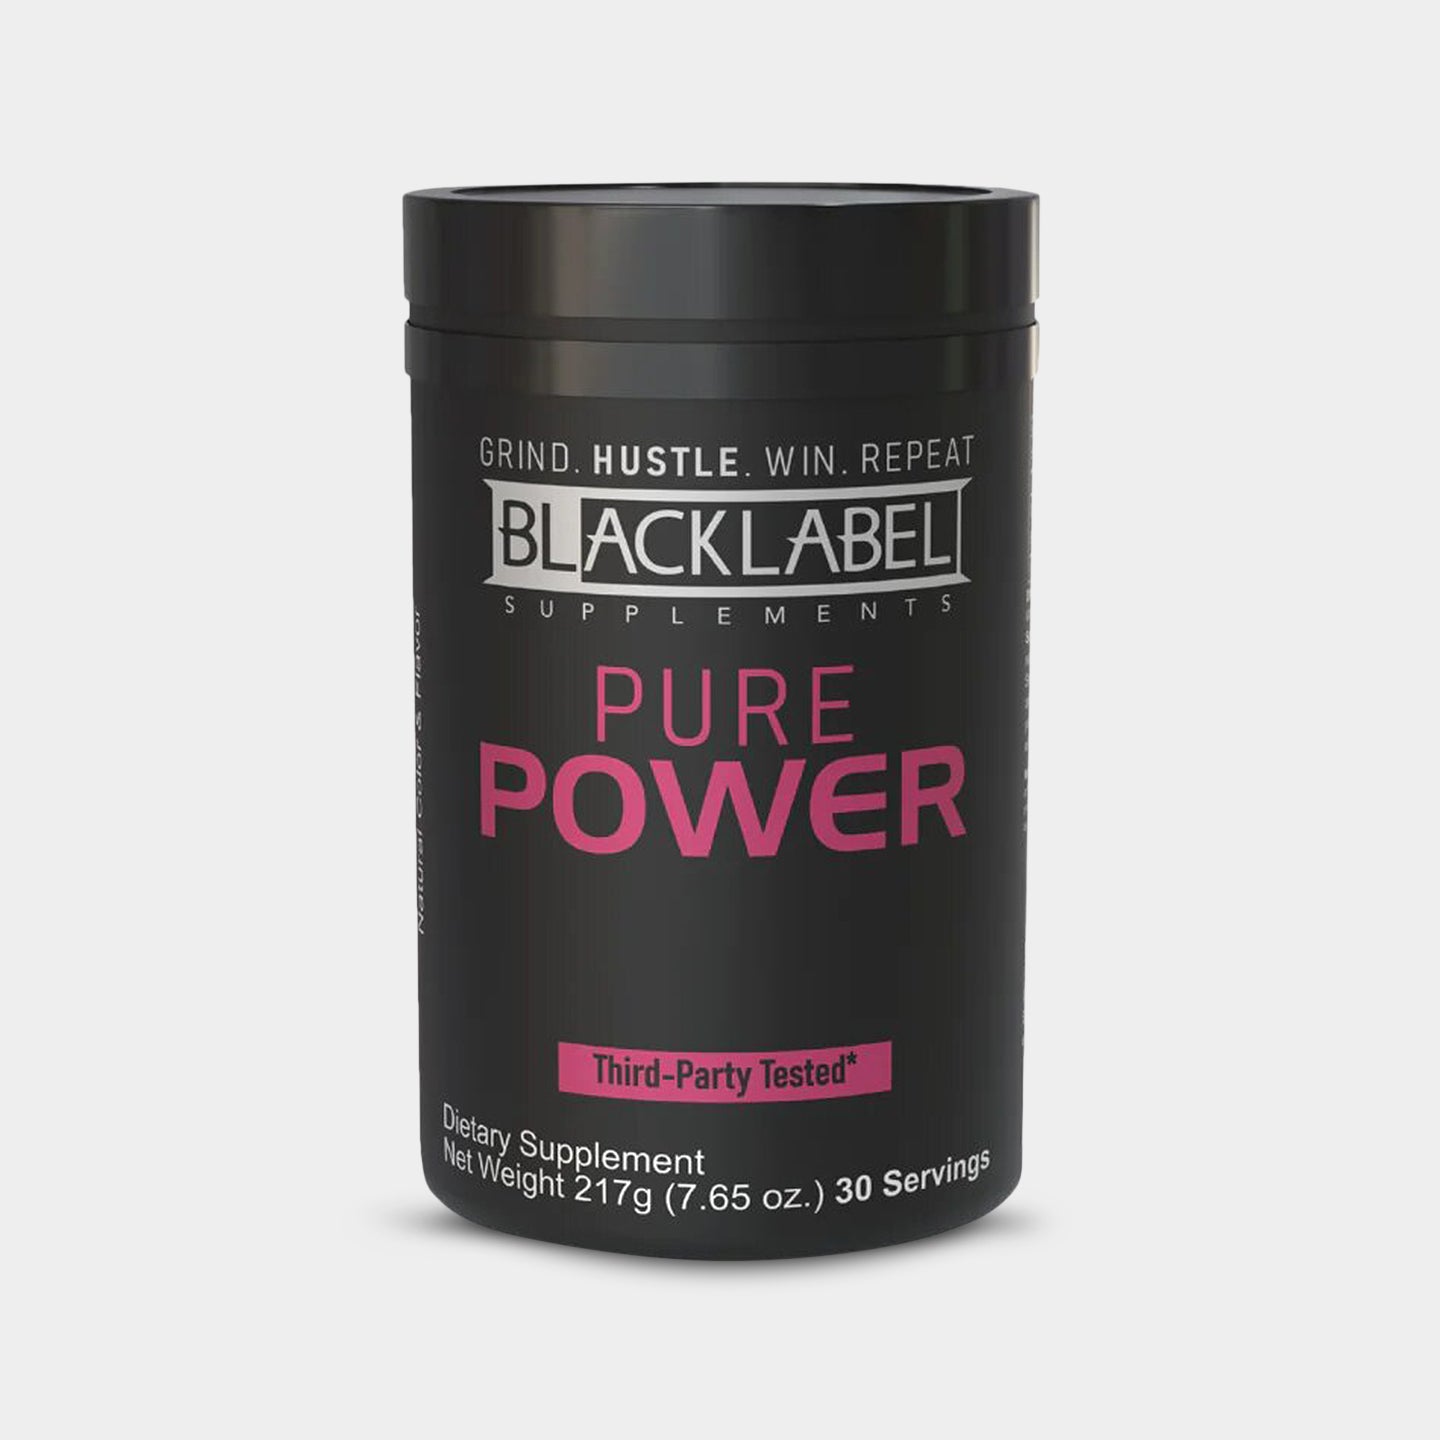 BLACKLABEL Supplements Pure Power